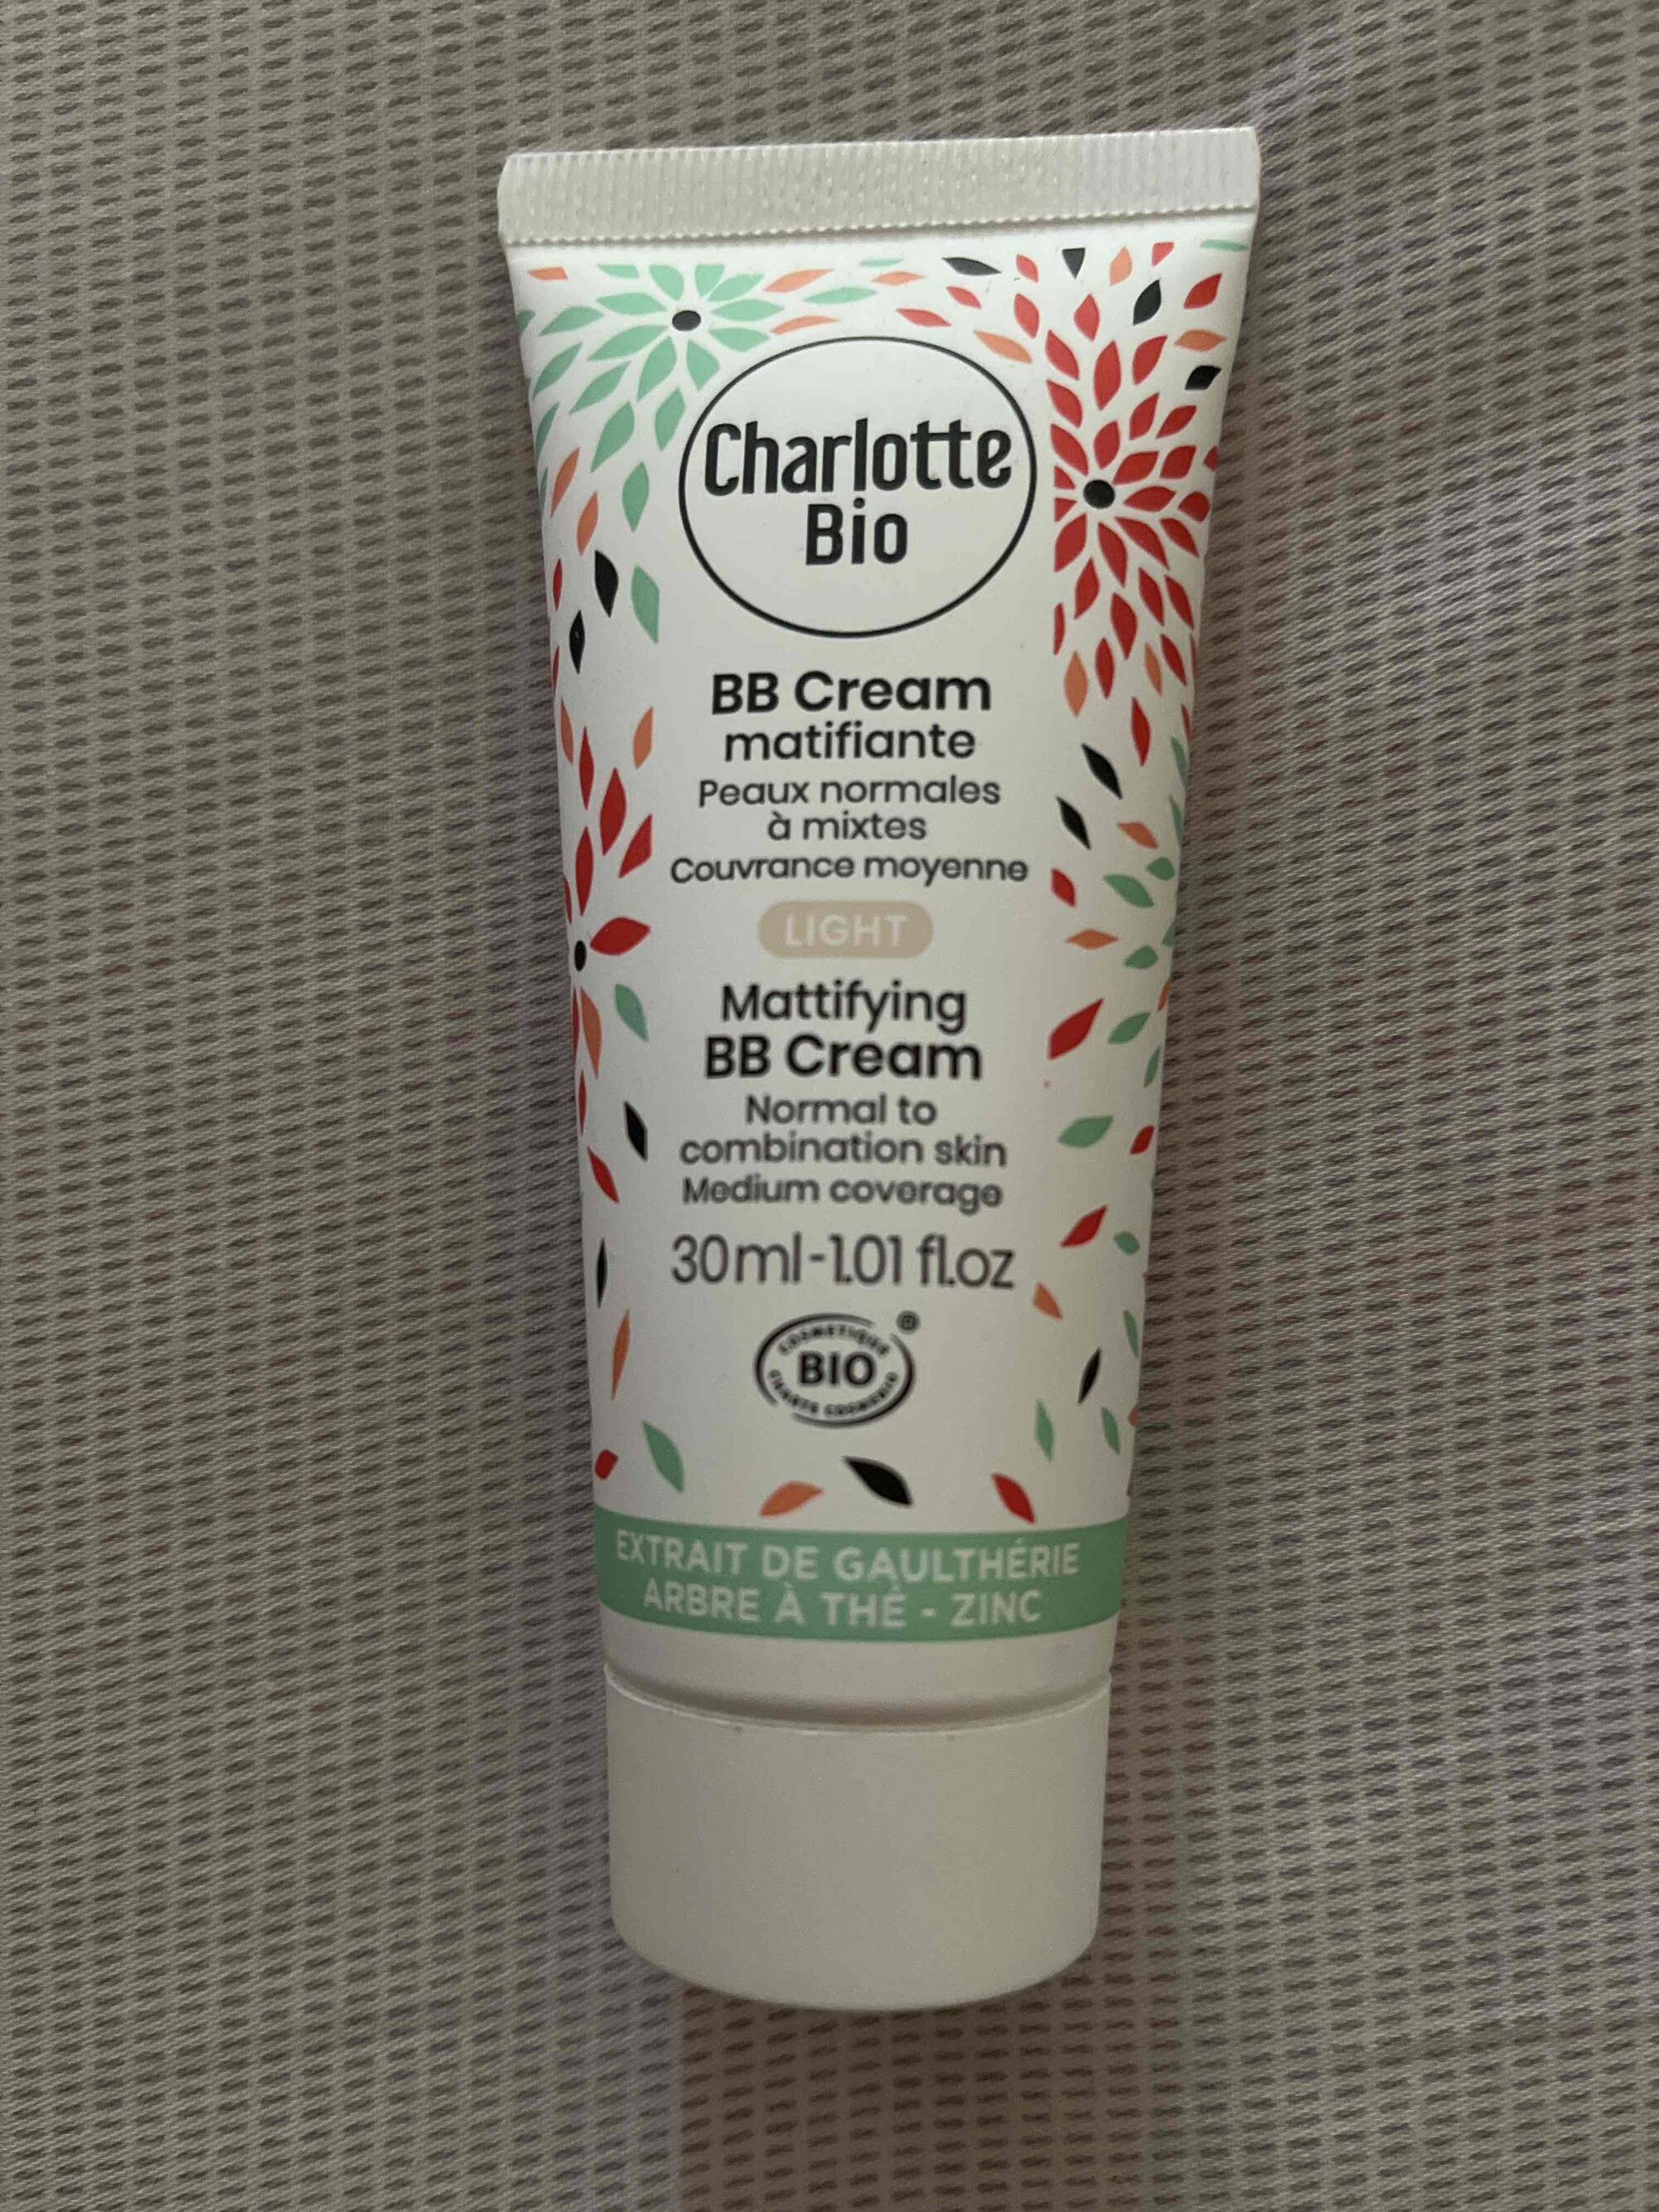 CHARLOTTE BIO - BB Cream matifiante